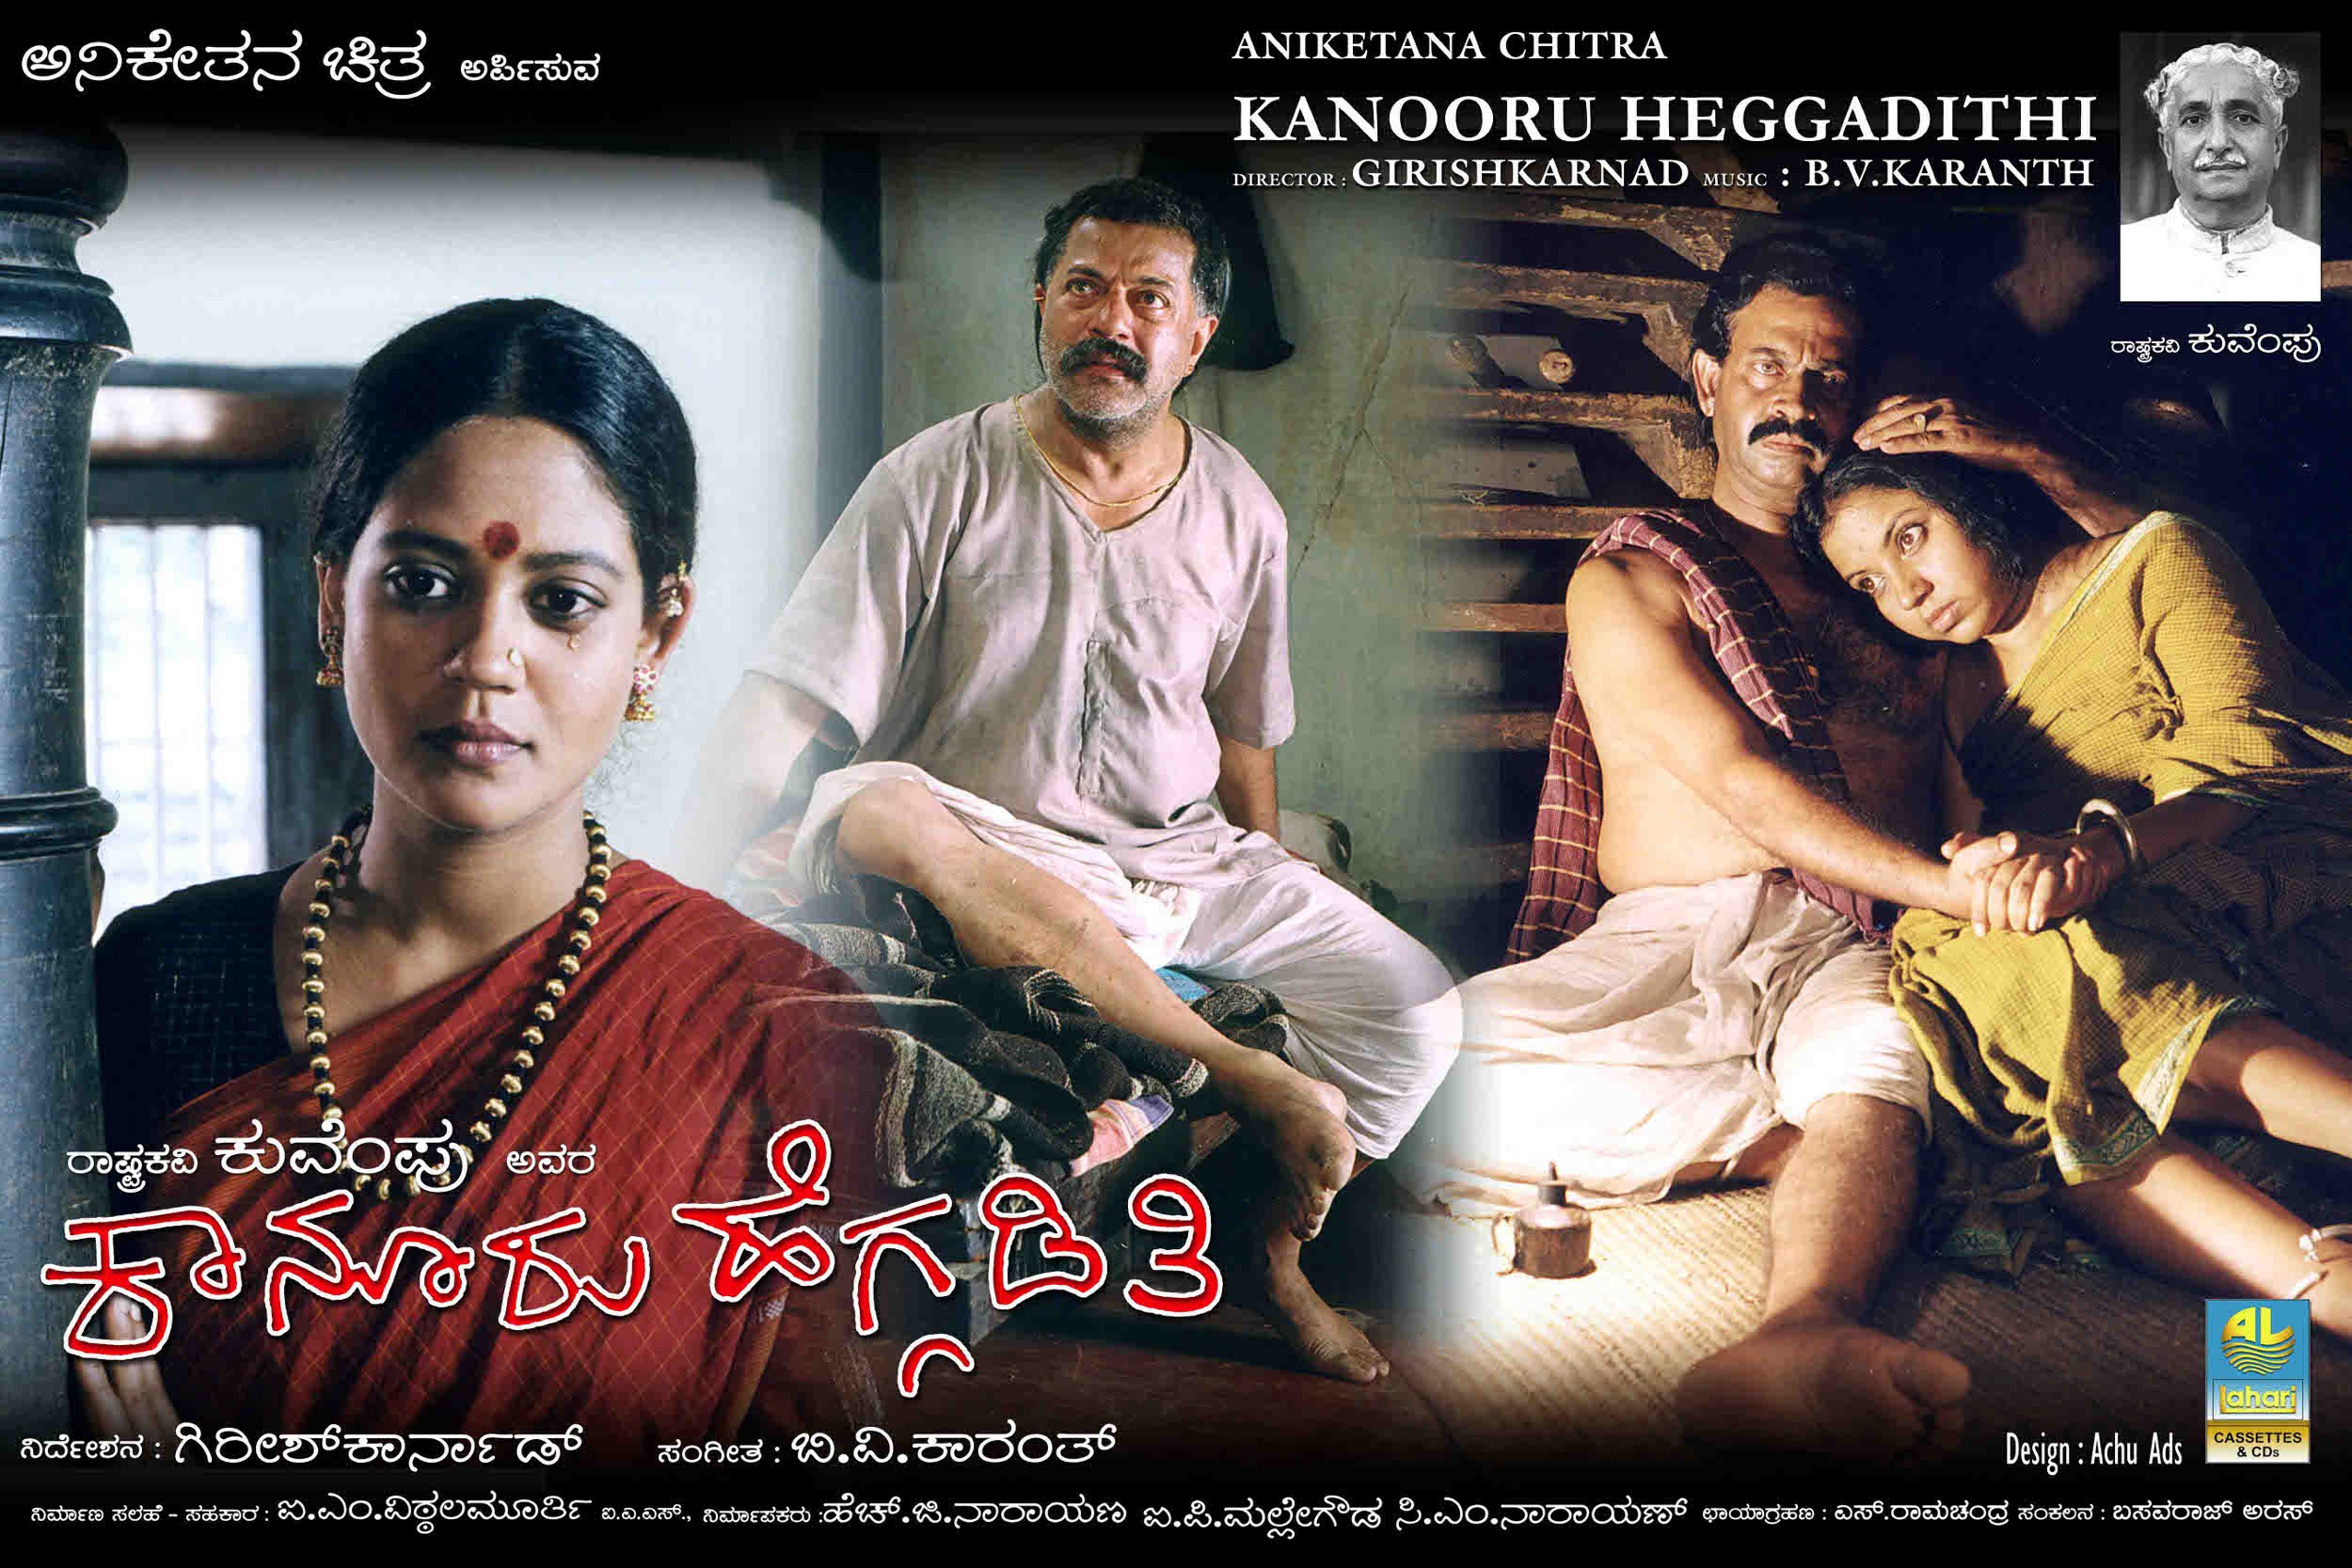 Mega Sized Movie Poster Image for Kanooru Heggadithi (#3 of 4)